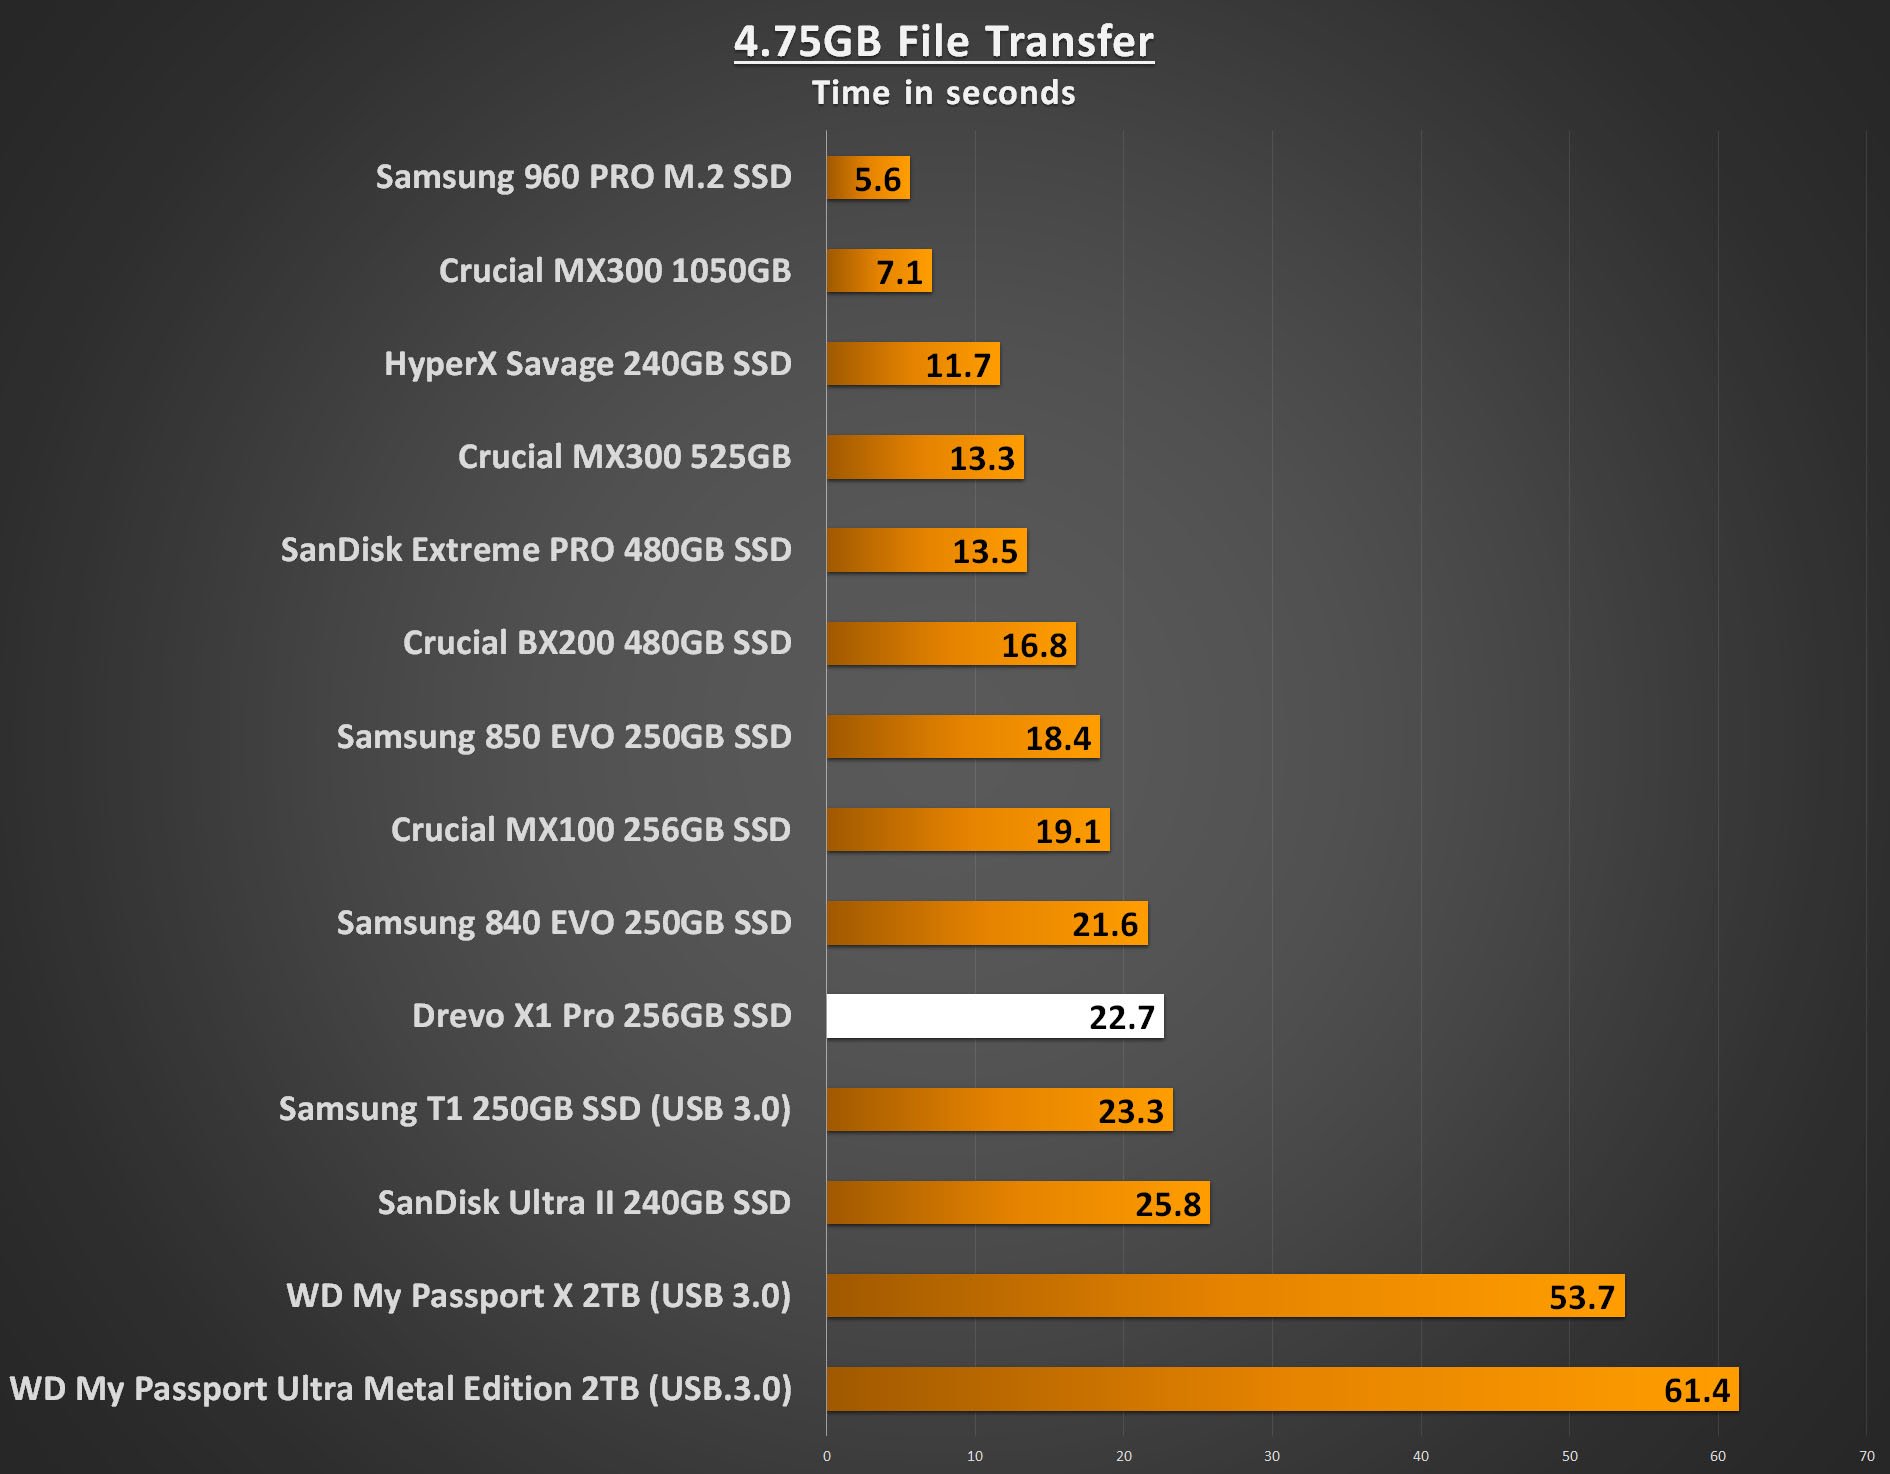 Drevo X1 Pro 256GB Performance - 4.75GB File Transfer